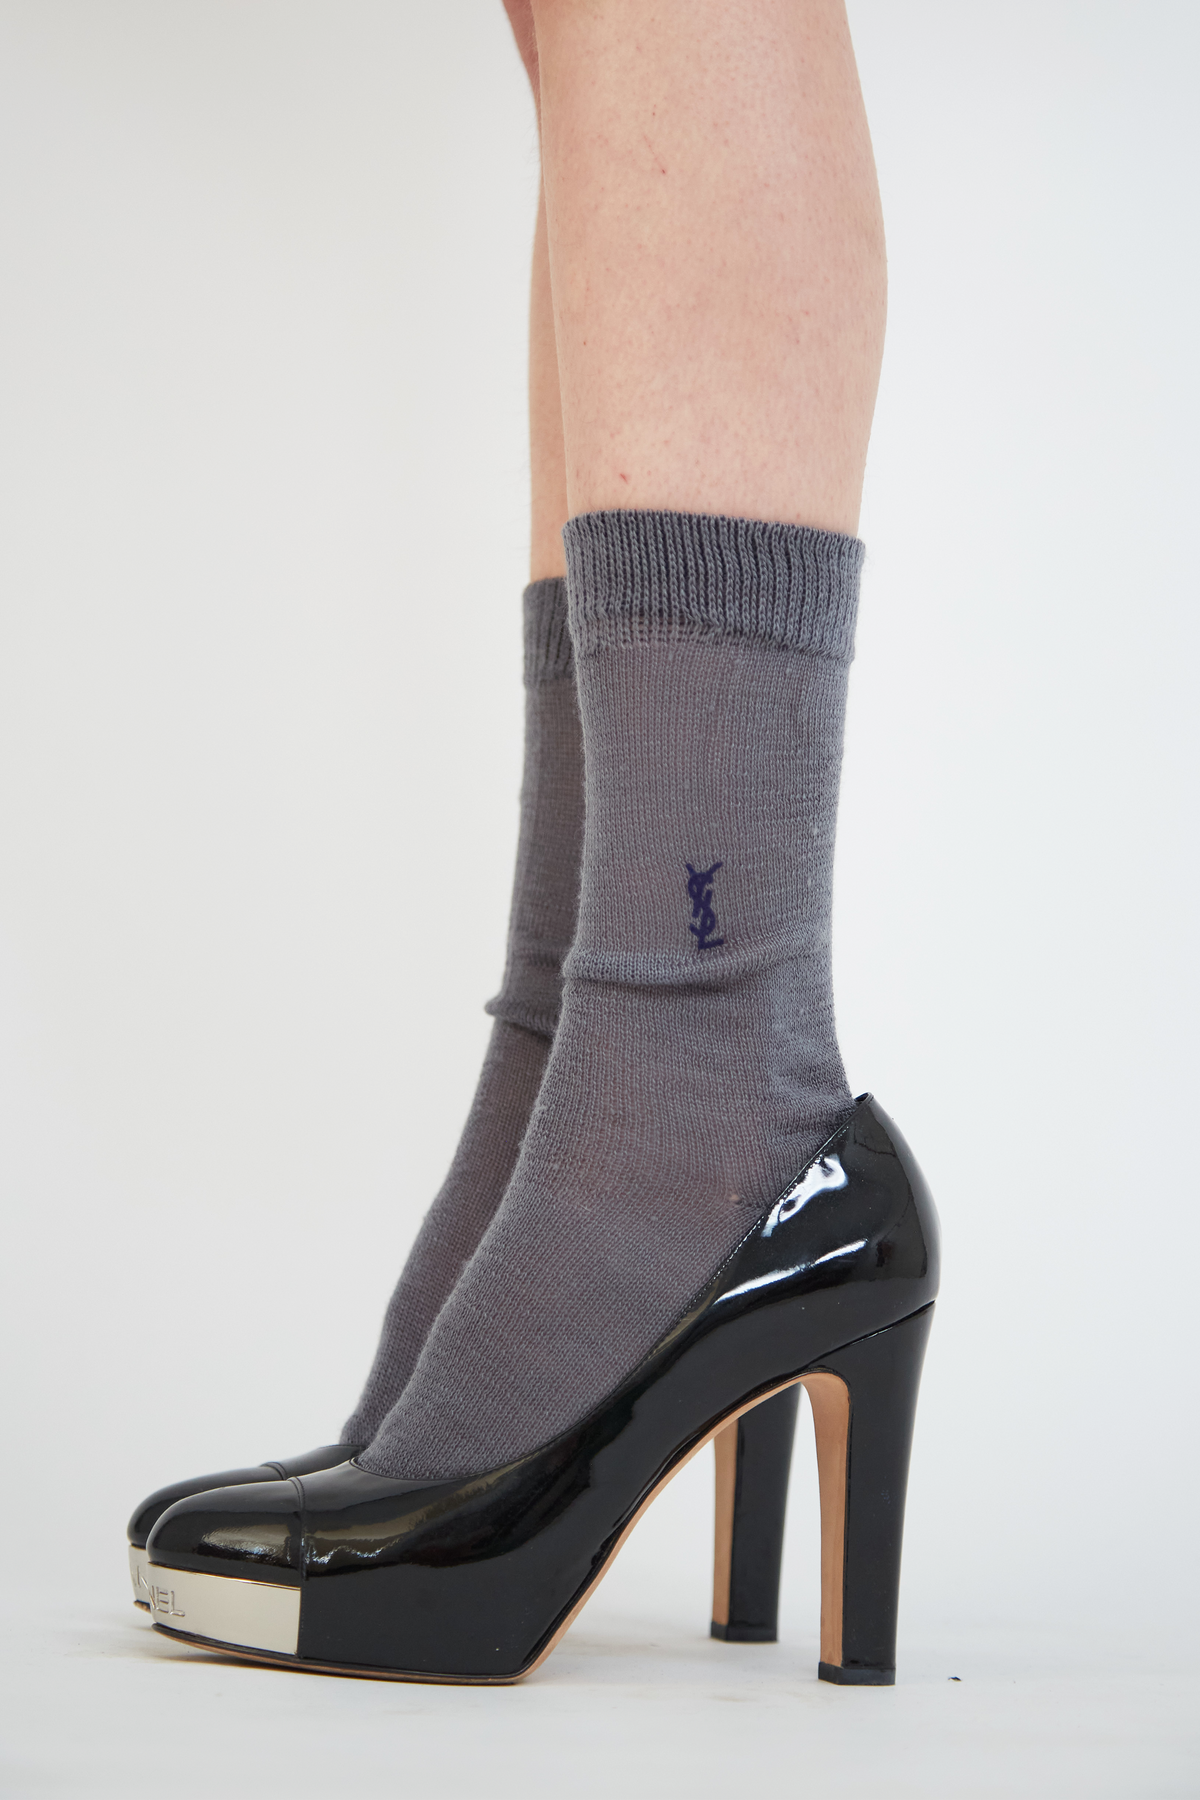 Chanel platform heels